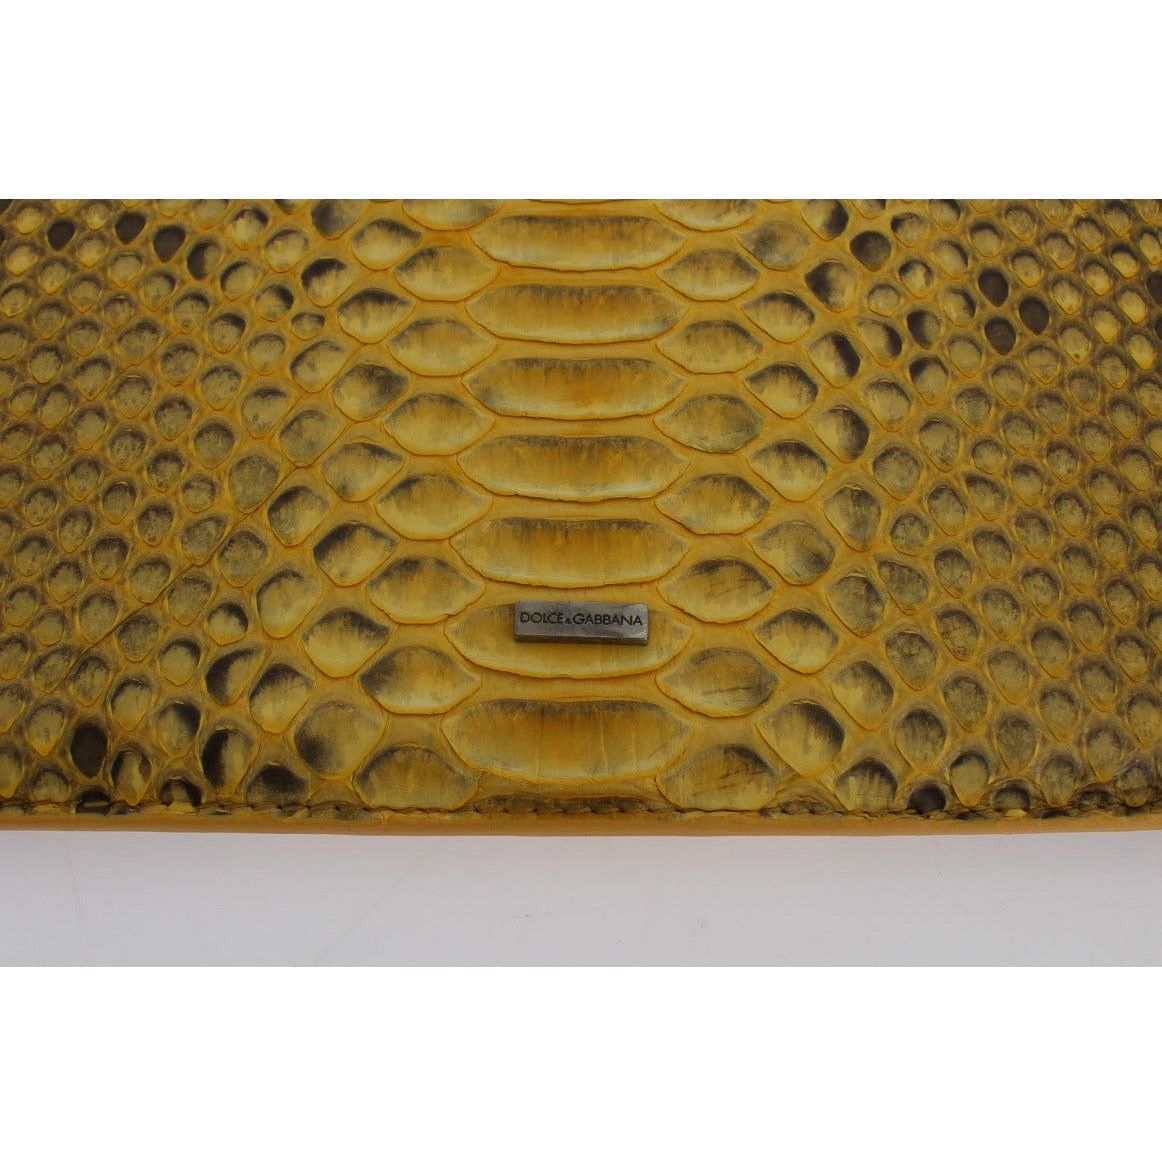 Dolce & Gabbana Sleek Python Snakeskin Tablet Case in Yellow yellow-snakeskin-p2-tablet-ebook-cover 59008-yellow-snakeskin-p2-tablet-ebook-cover-3.jpg